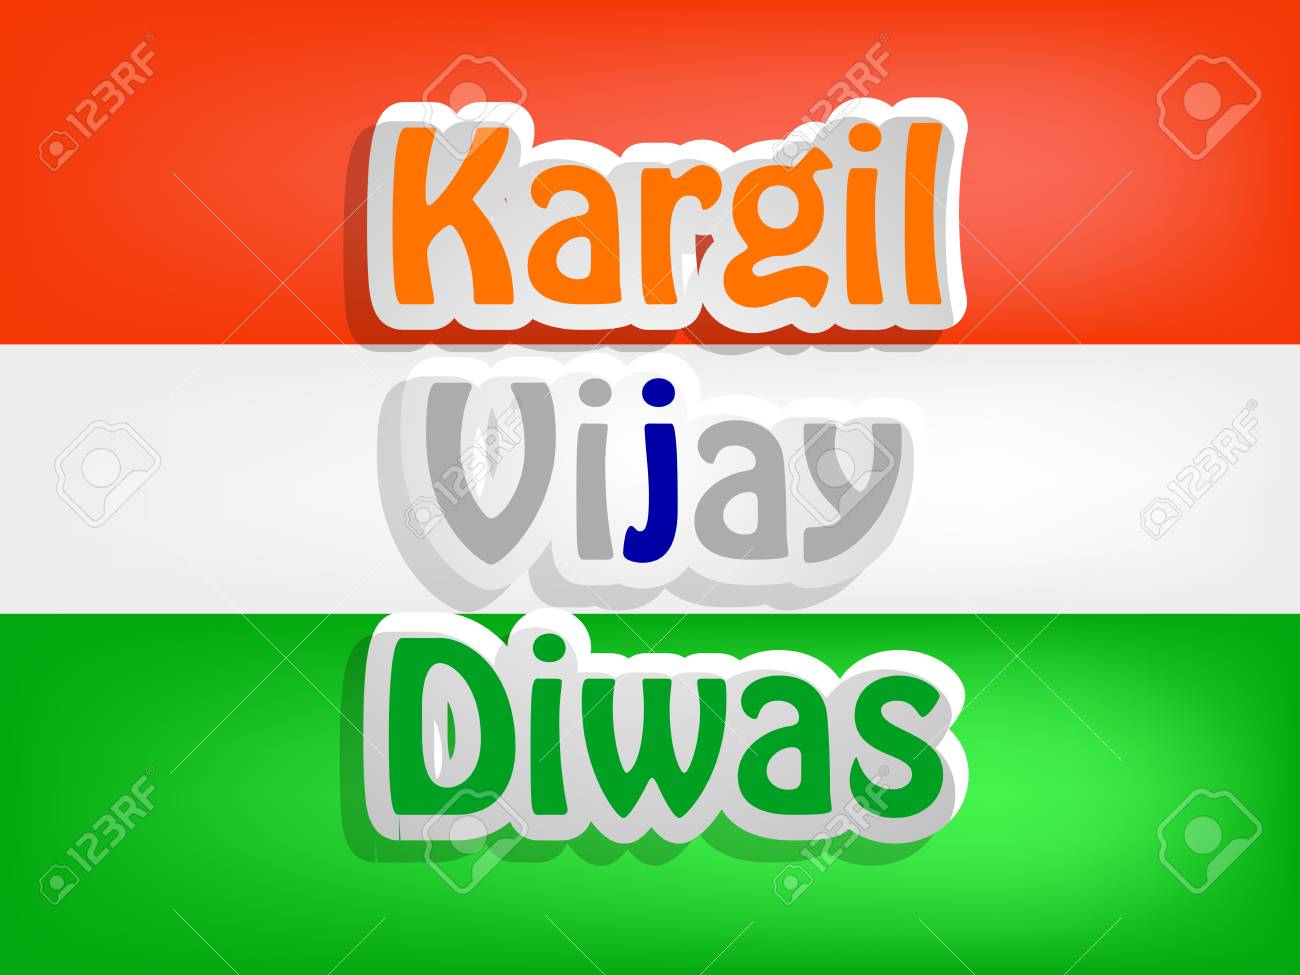 Illustration Of Kargil Vijay Diwas Background It Is Celebrated